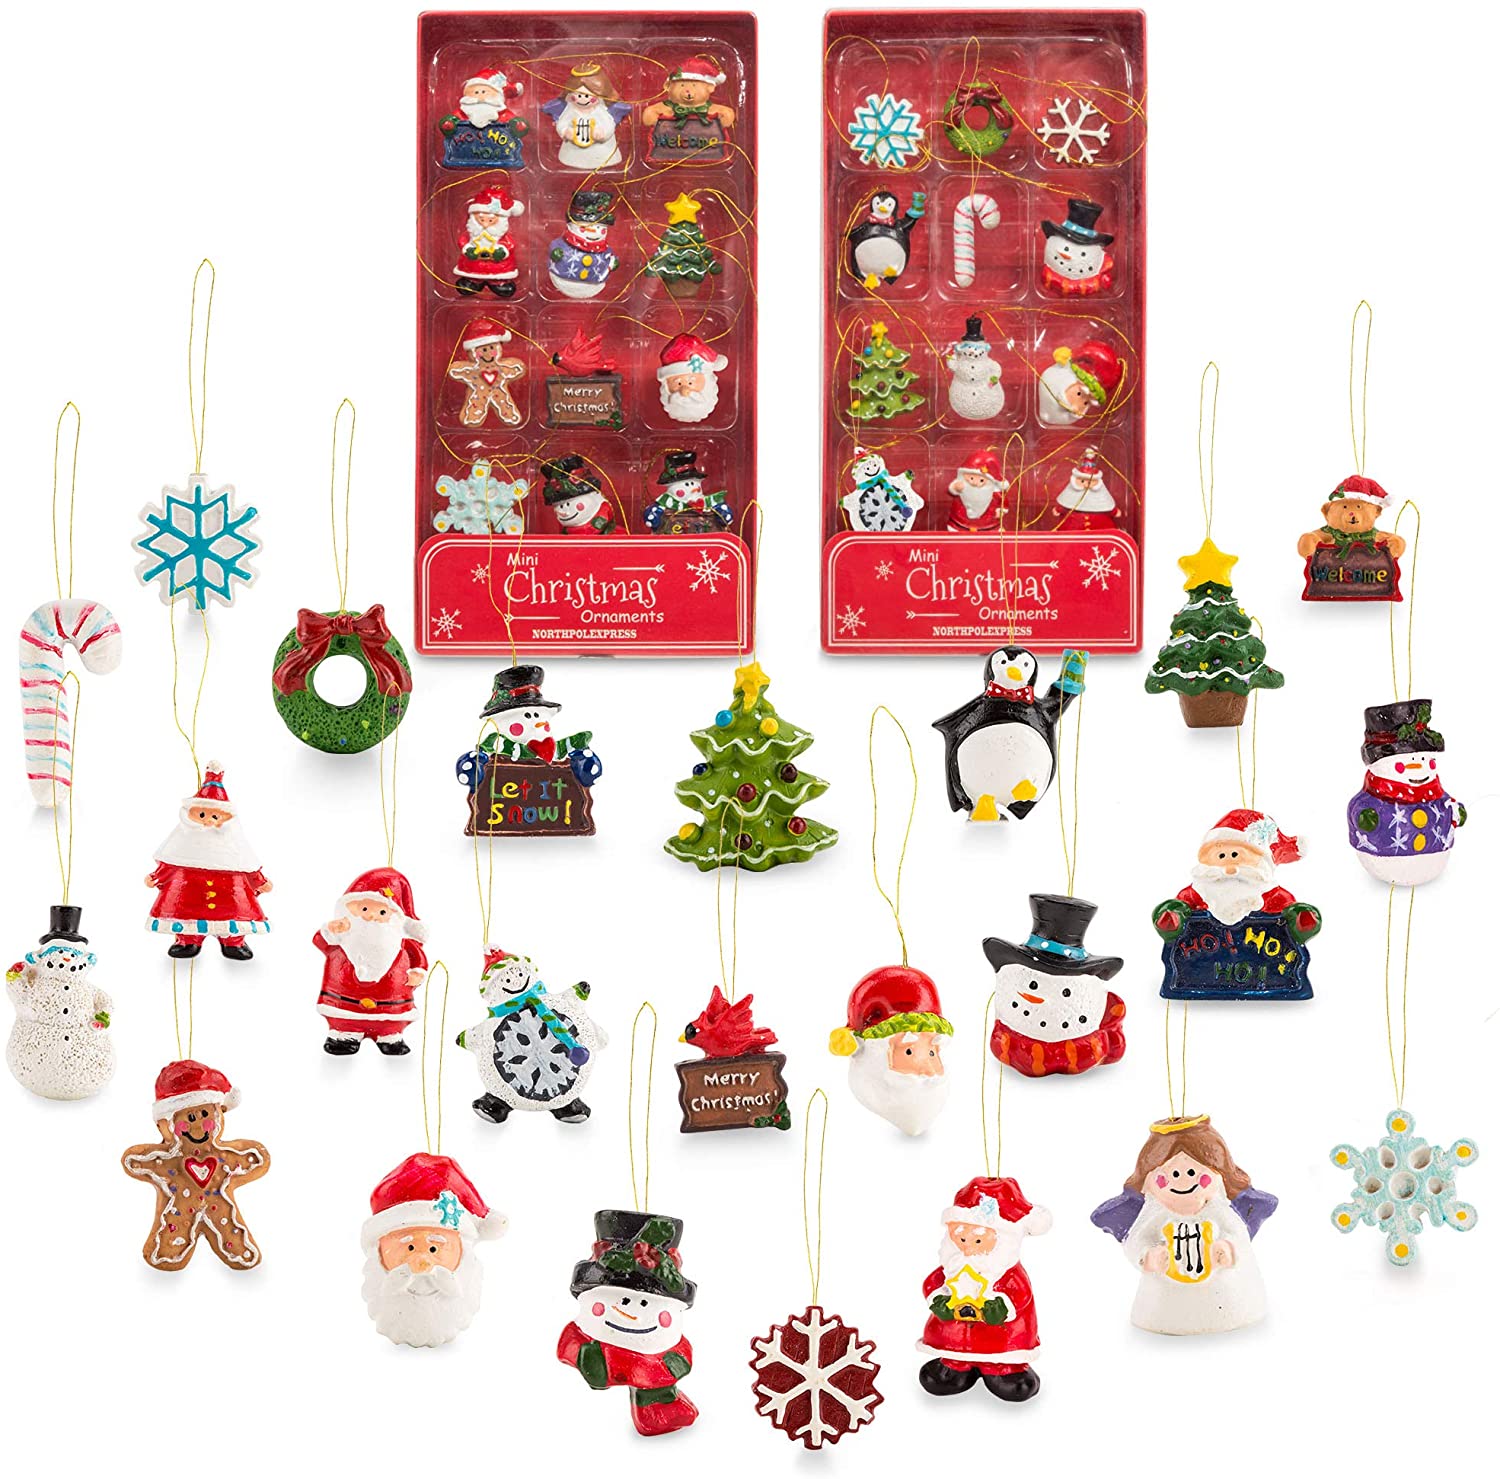 Mini Resin Christmas Ornaments Set of 24 - 2 boxes - Rustic Christmas –  ChristmasCottage